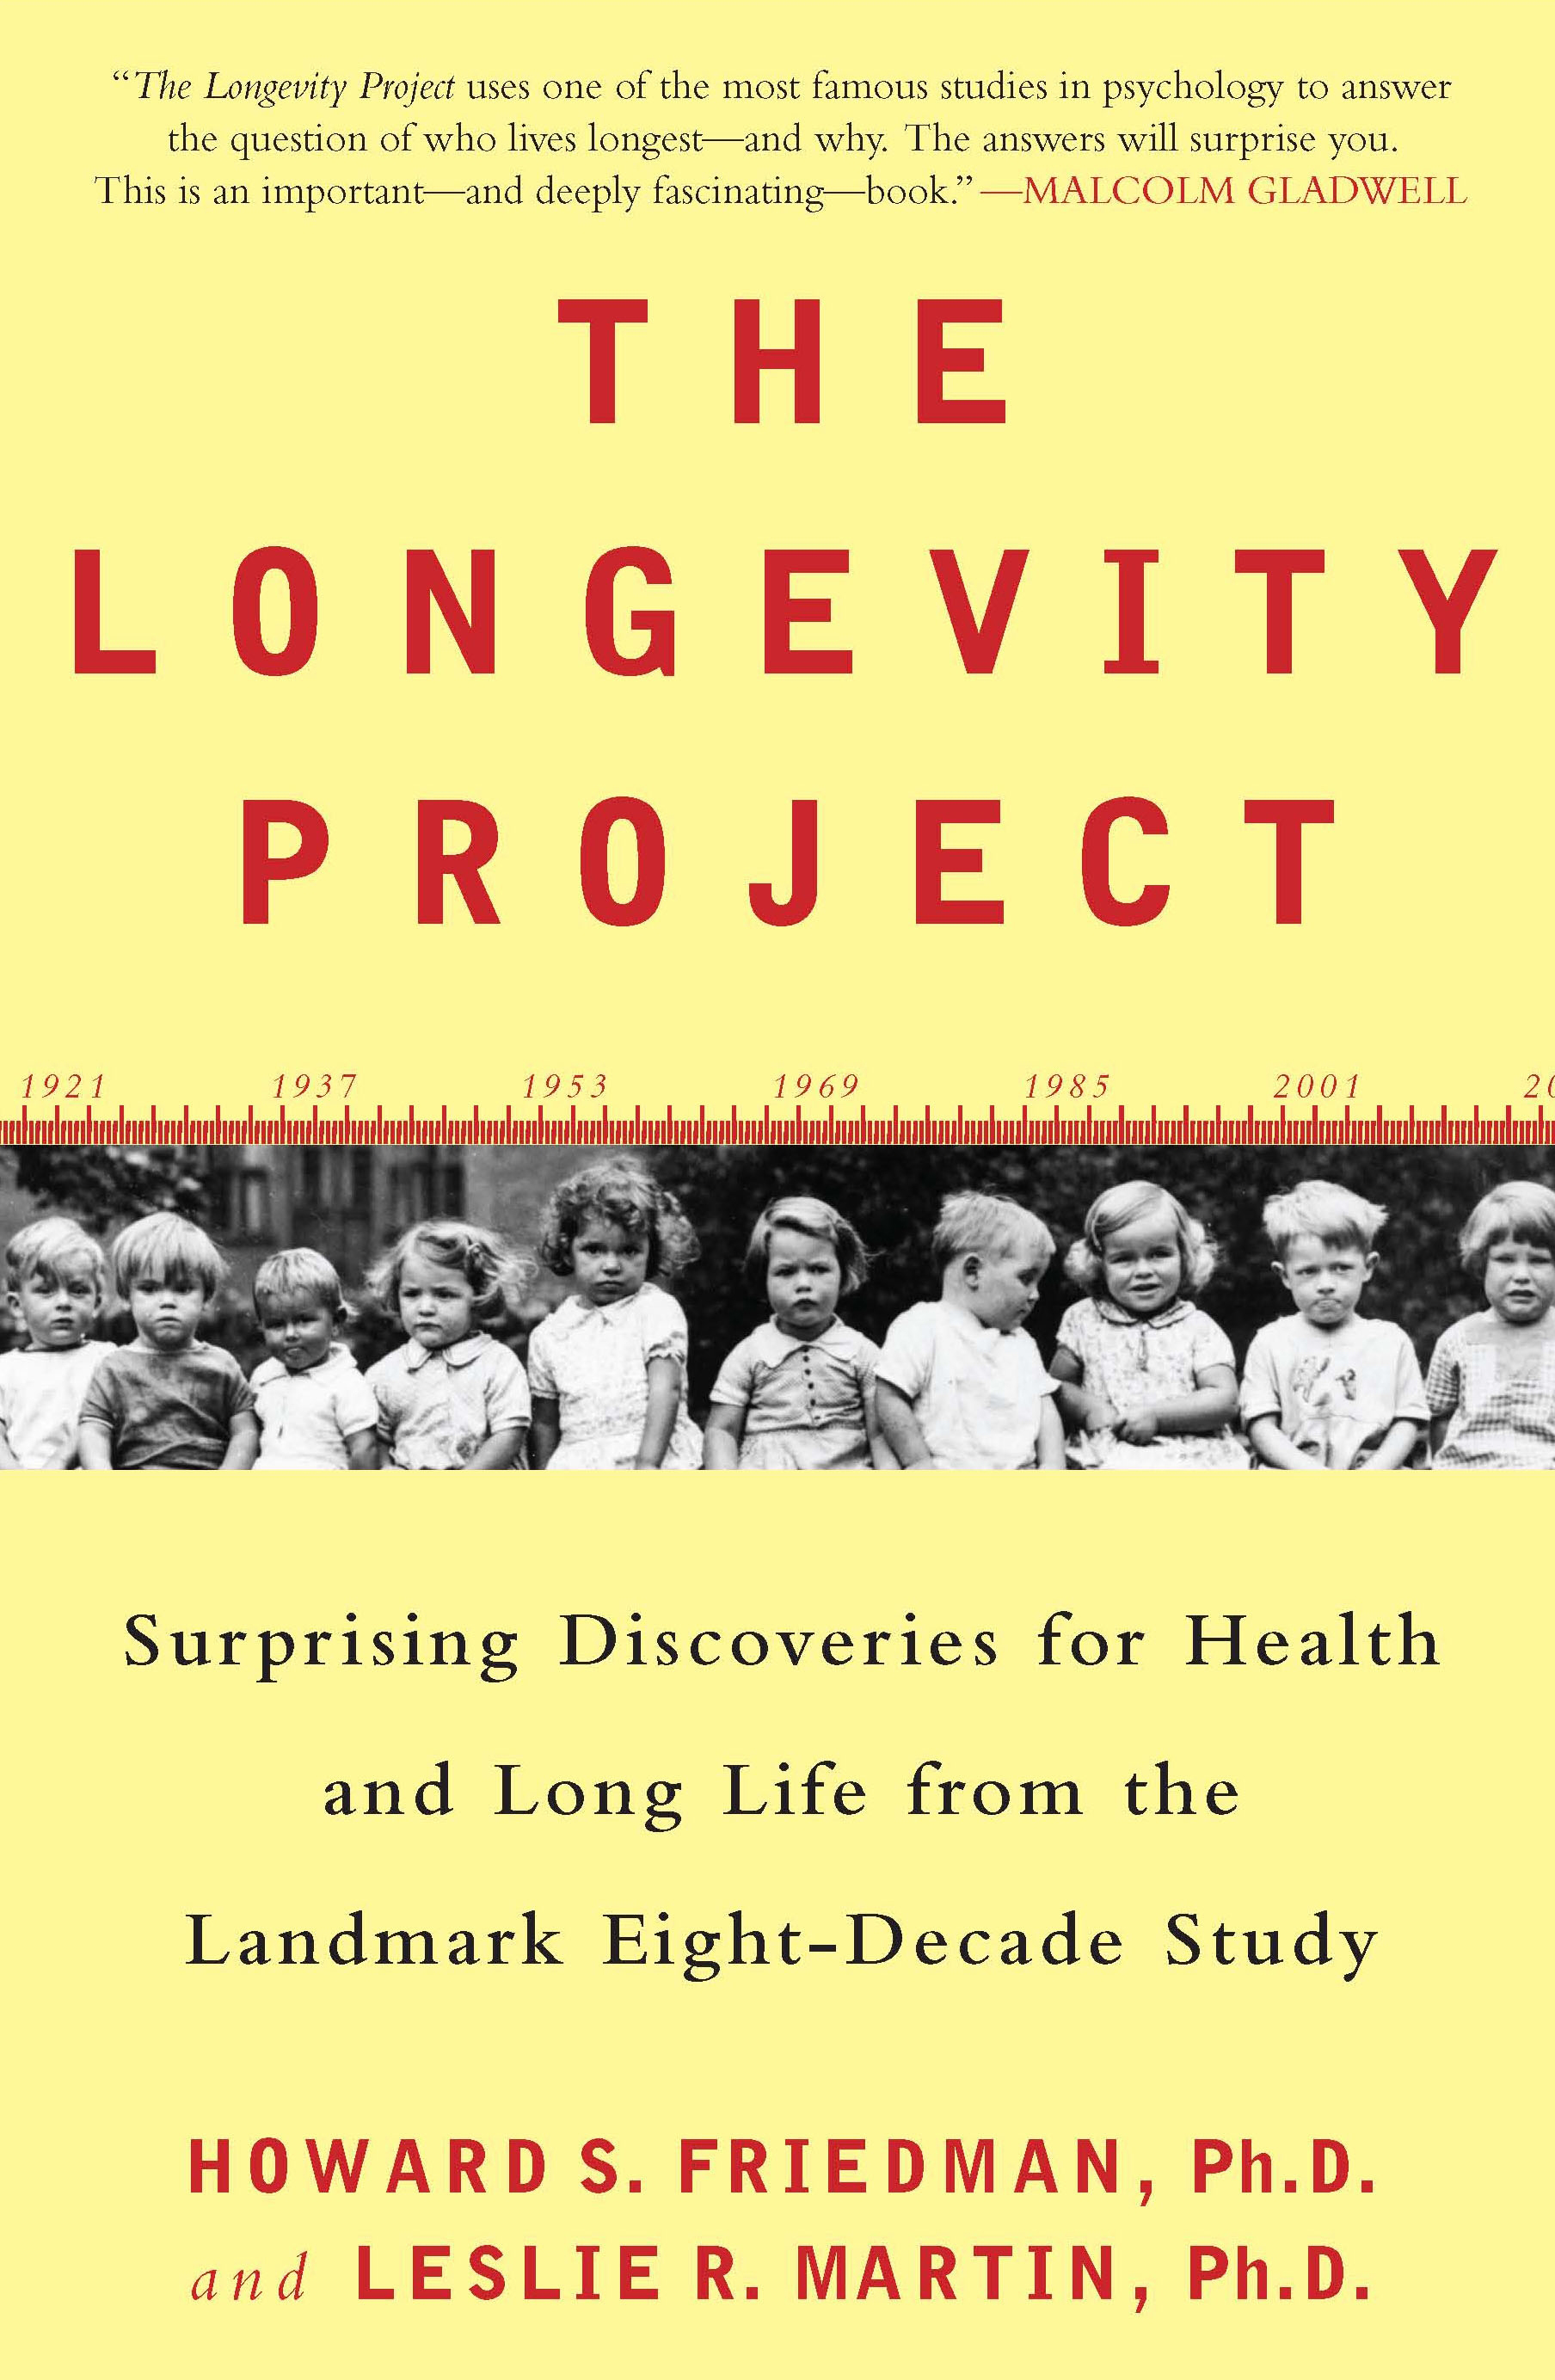 Longevity Project